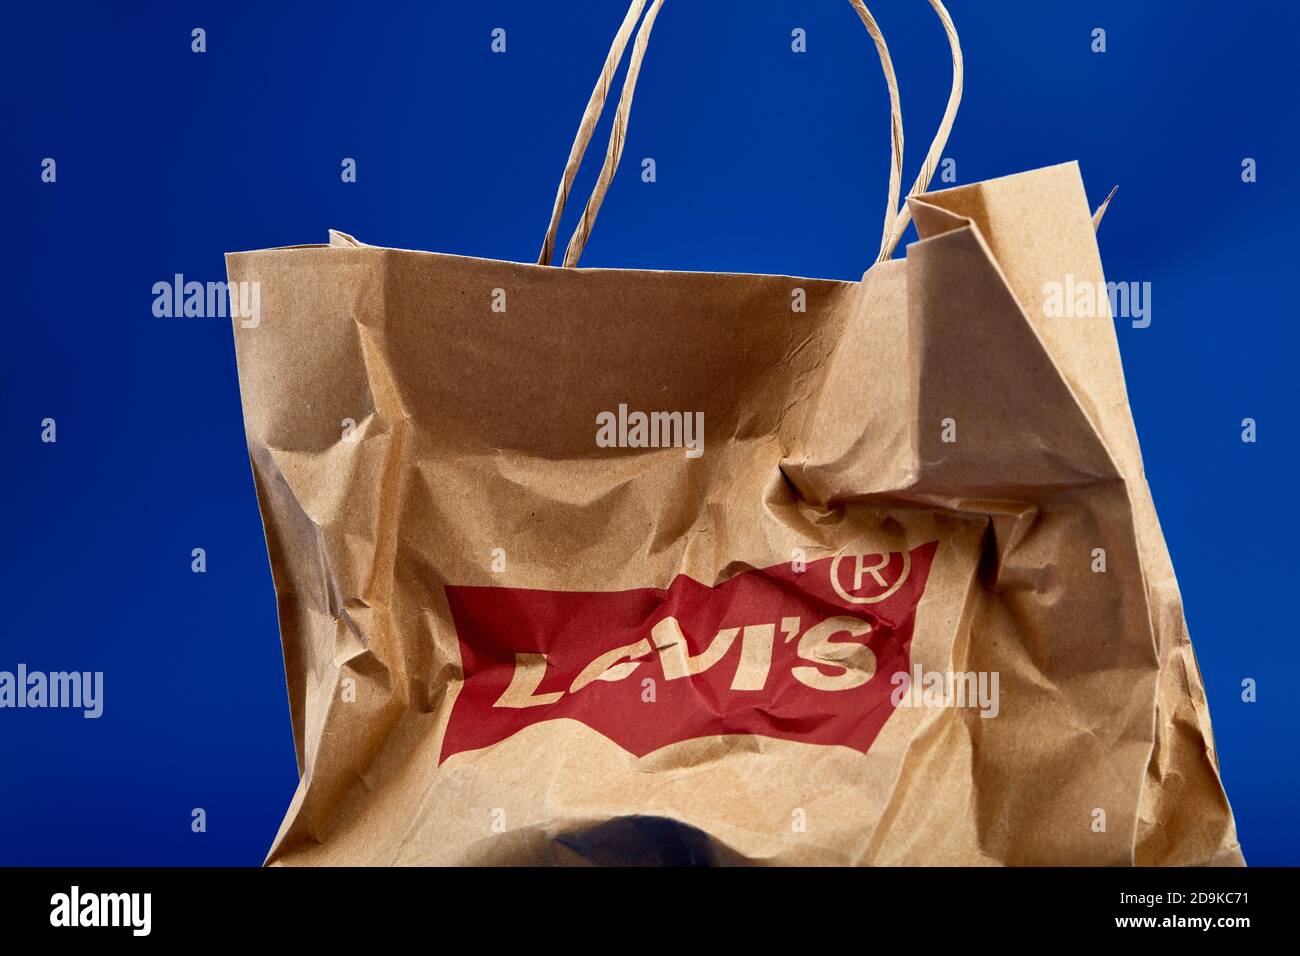 shopping bag levis